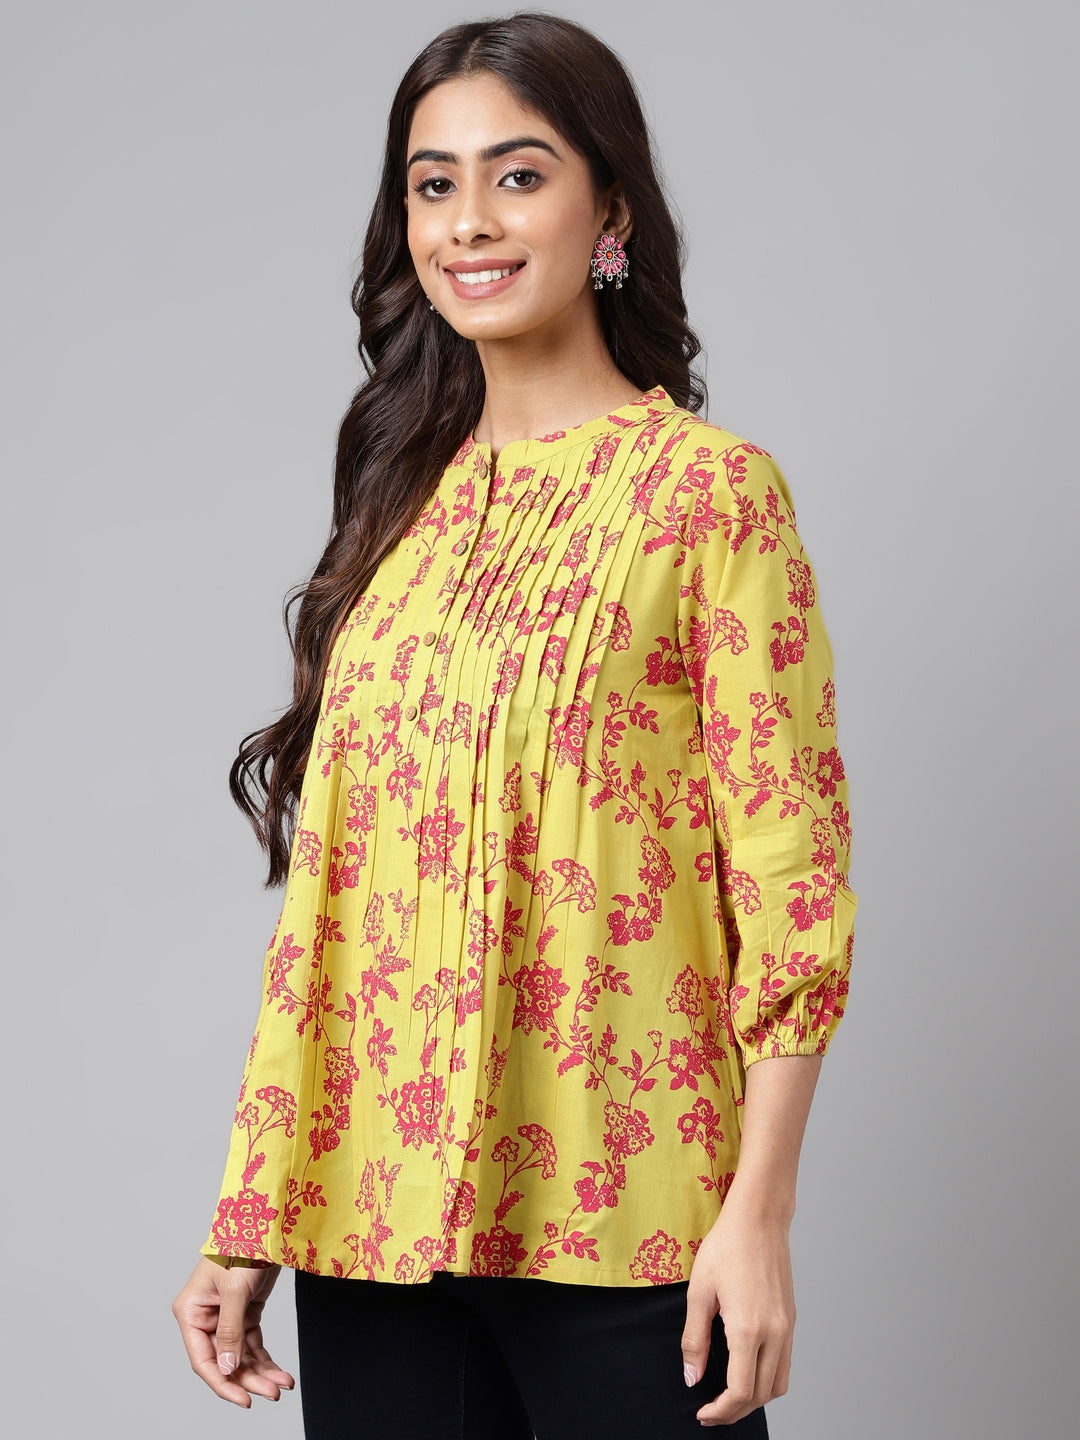 Women's Floral Printed Yellow Cotton Tops - Janasya